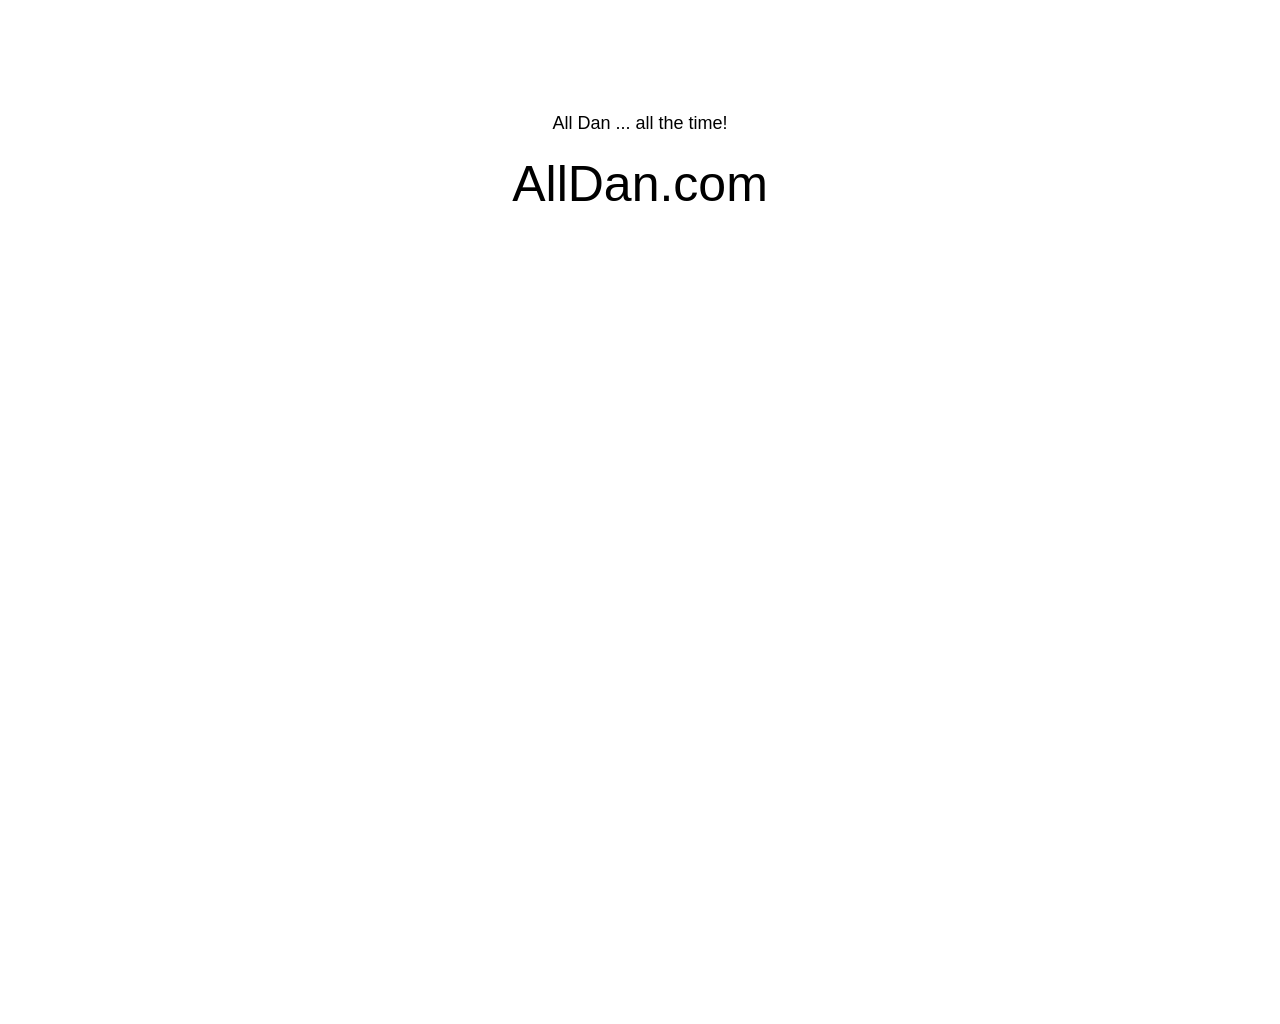 alldan.com